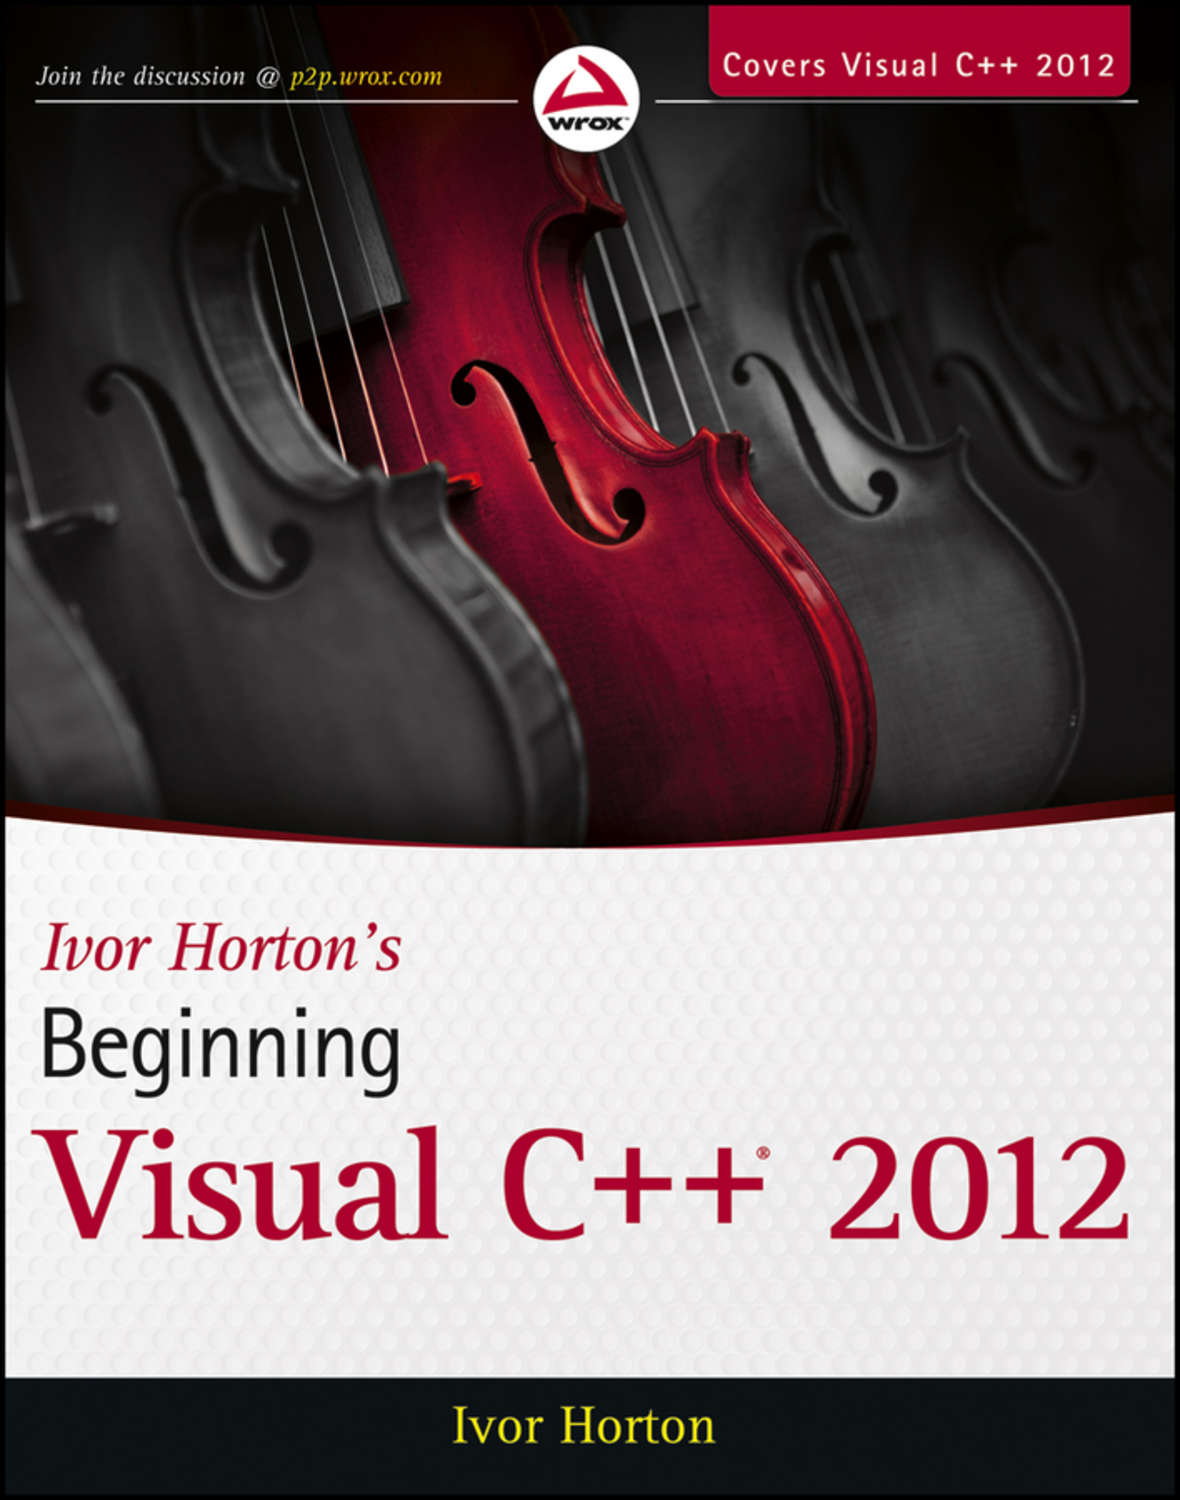 ivor hortons beginning visual c++ 2010 ebook torrents